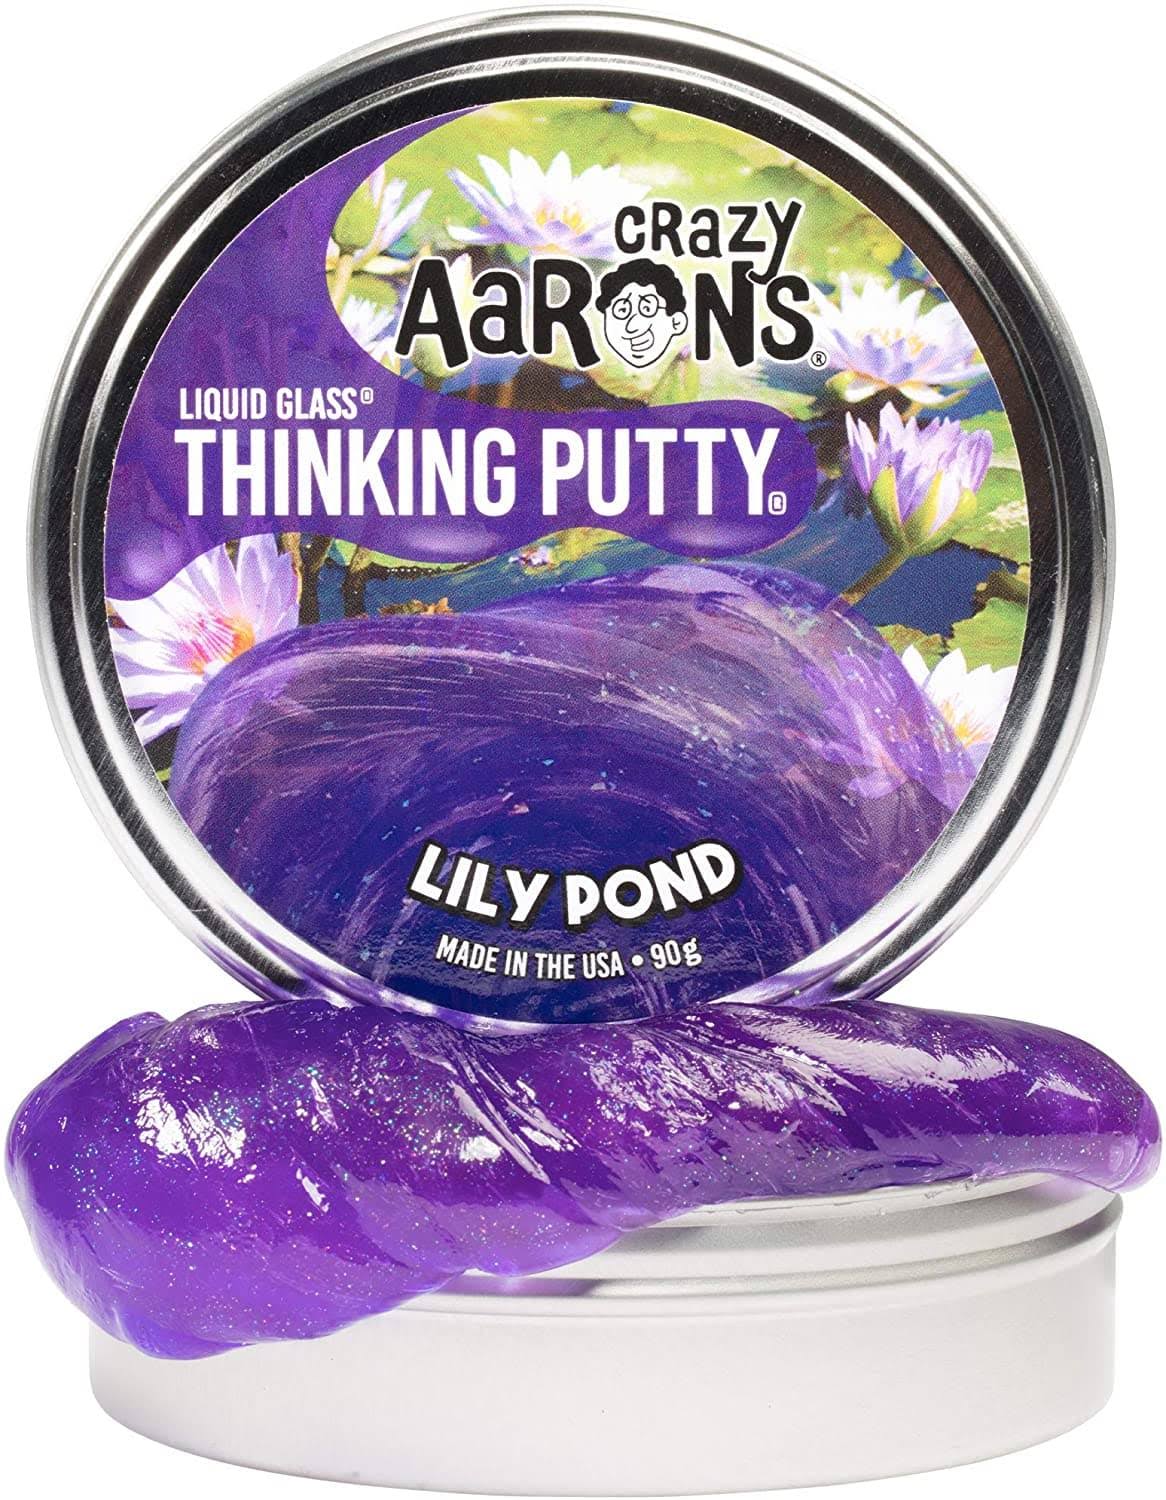 Crazy Aaron's Liquid Glass (Lily Pond)